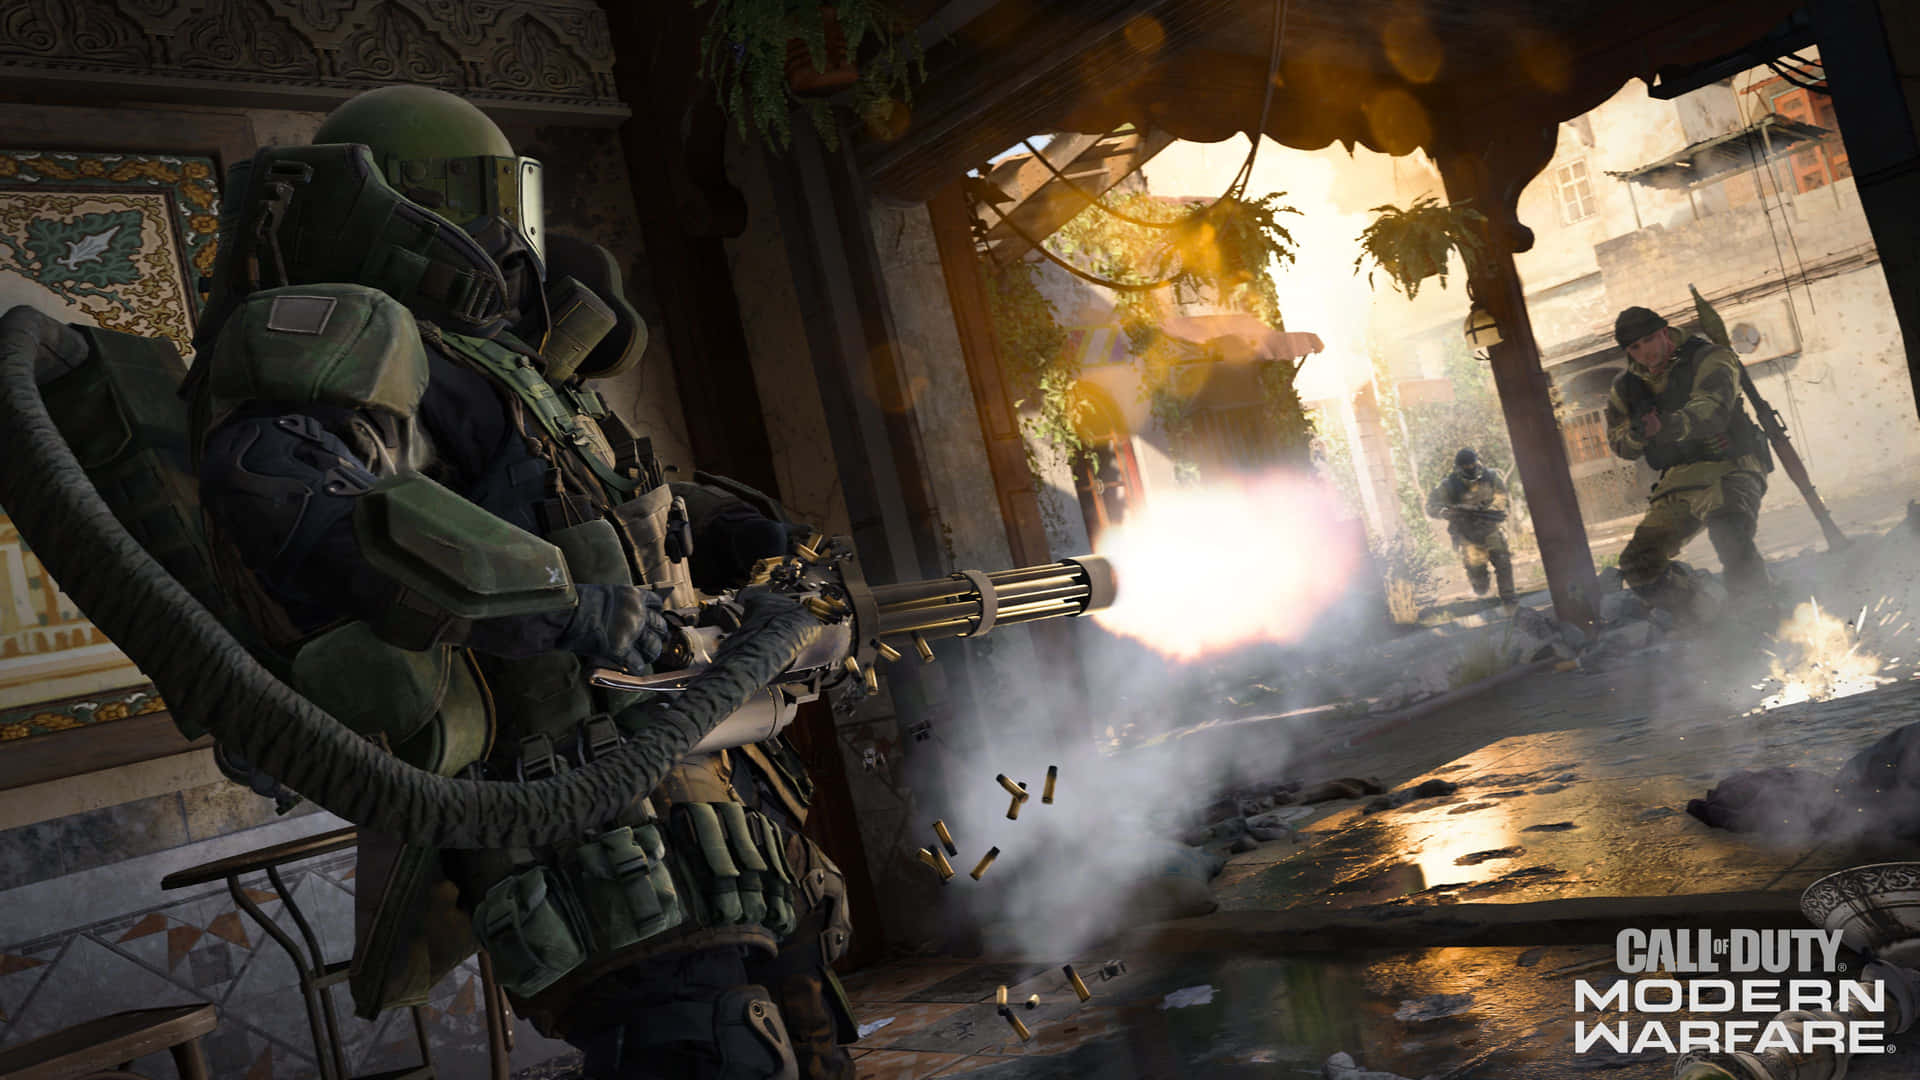 4kcall Of Duty Modern Warfare Bakgrundssoldat I En Byggnad Med Ett Kulspruta